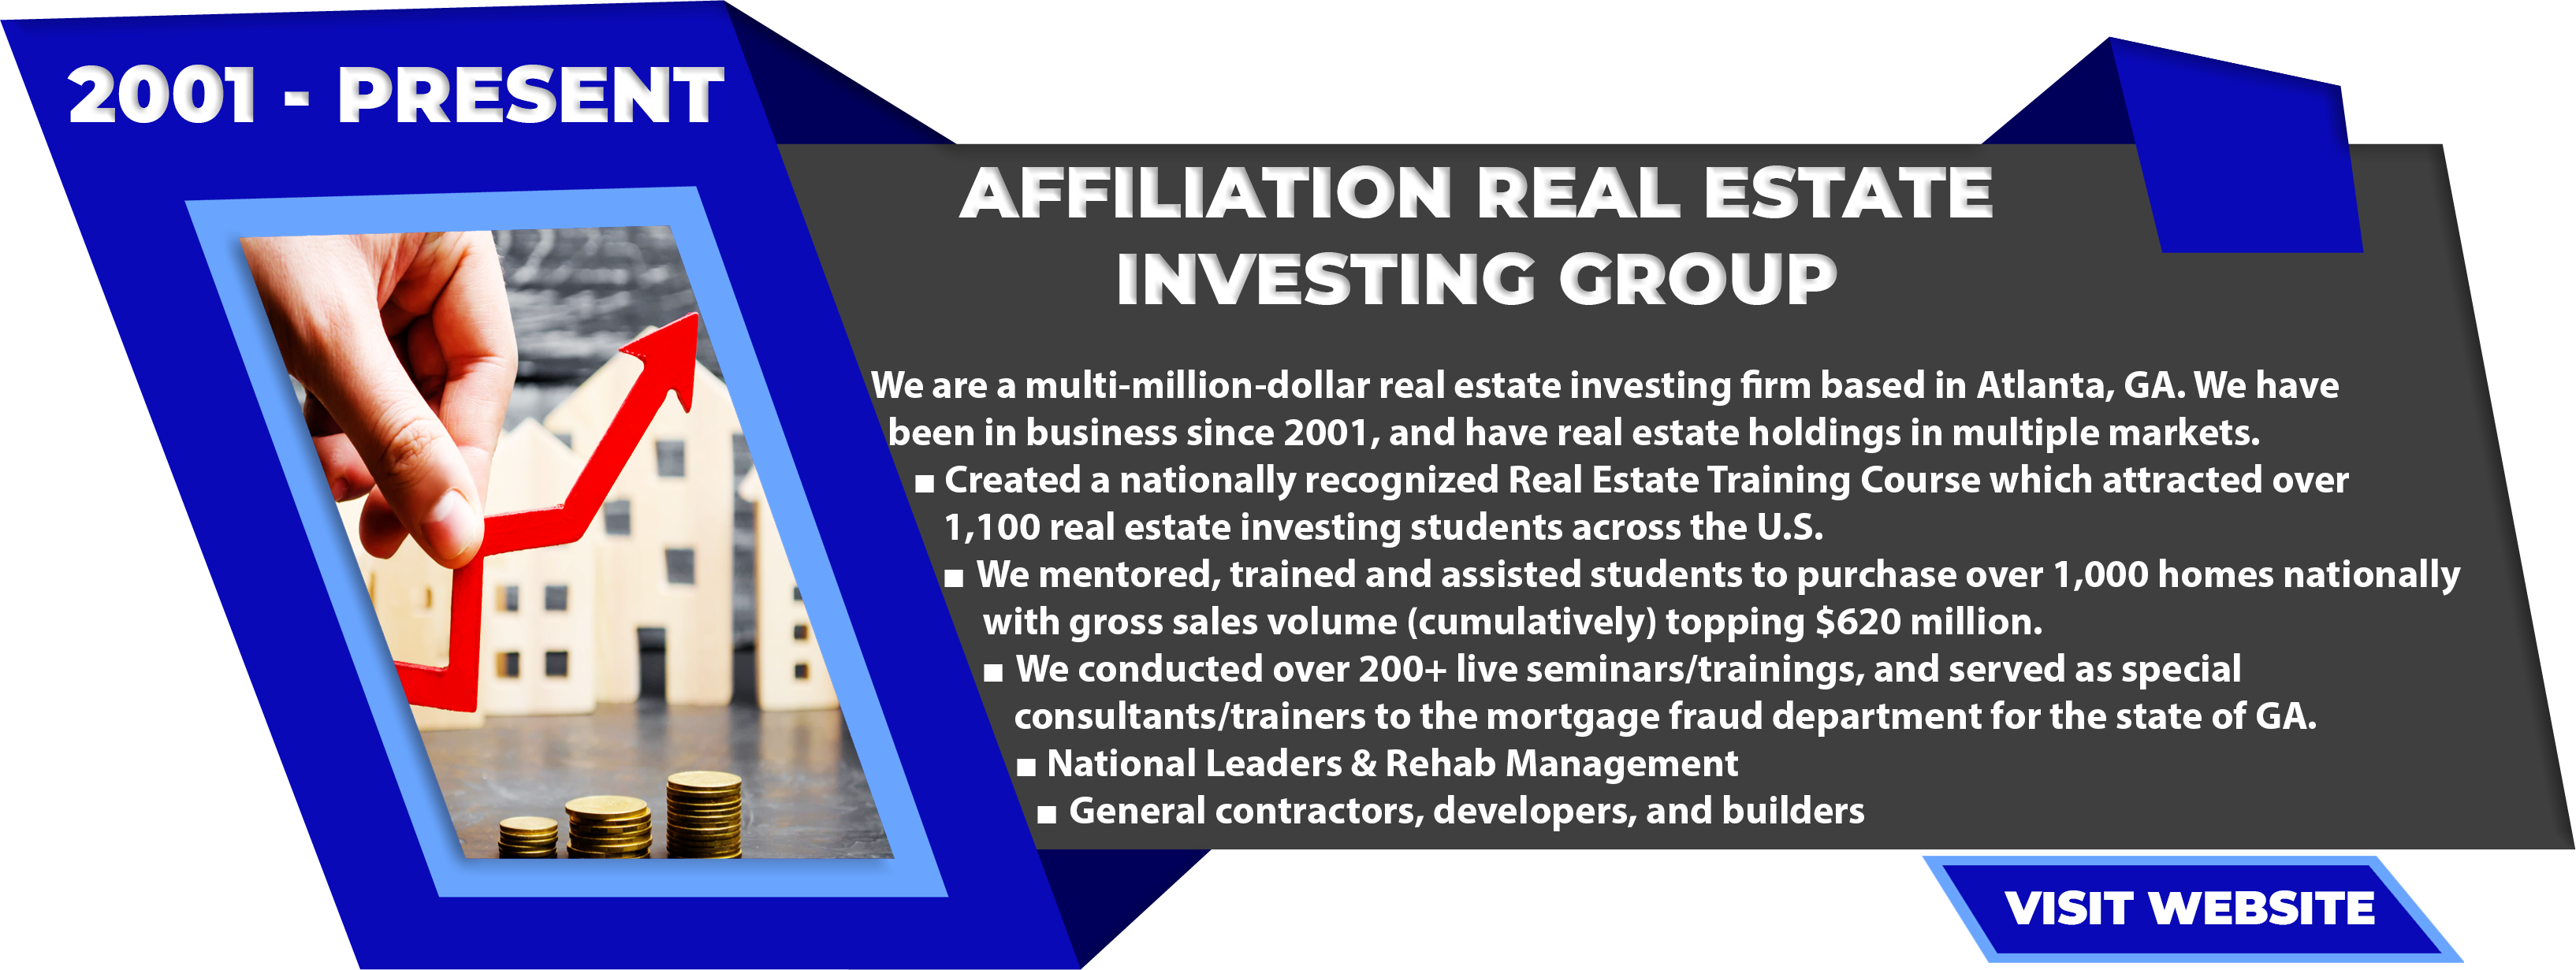 Affiliation-Real-Estate-Investing-Group-2001-Present-1